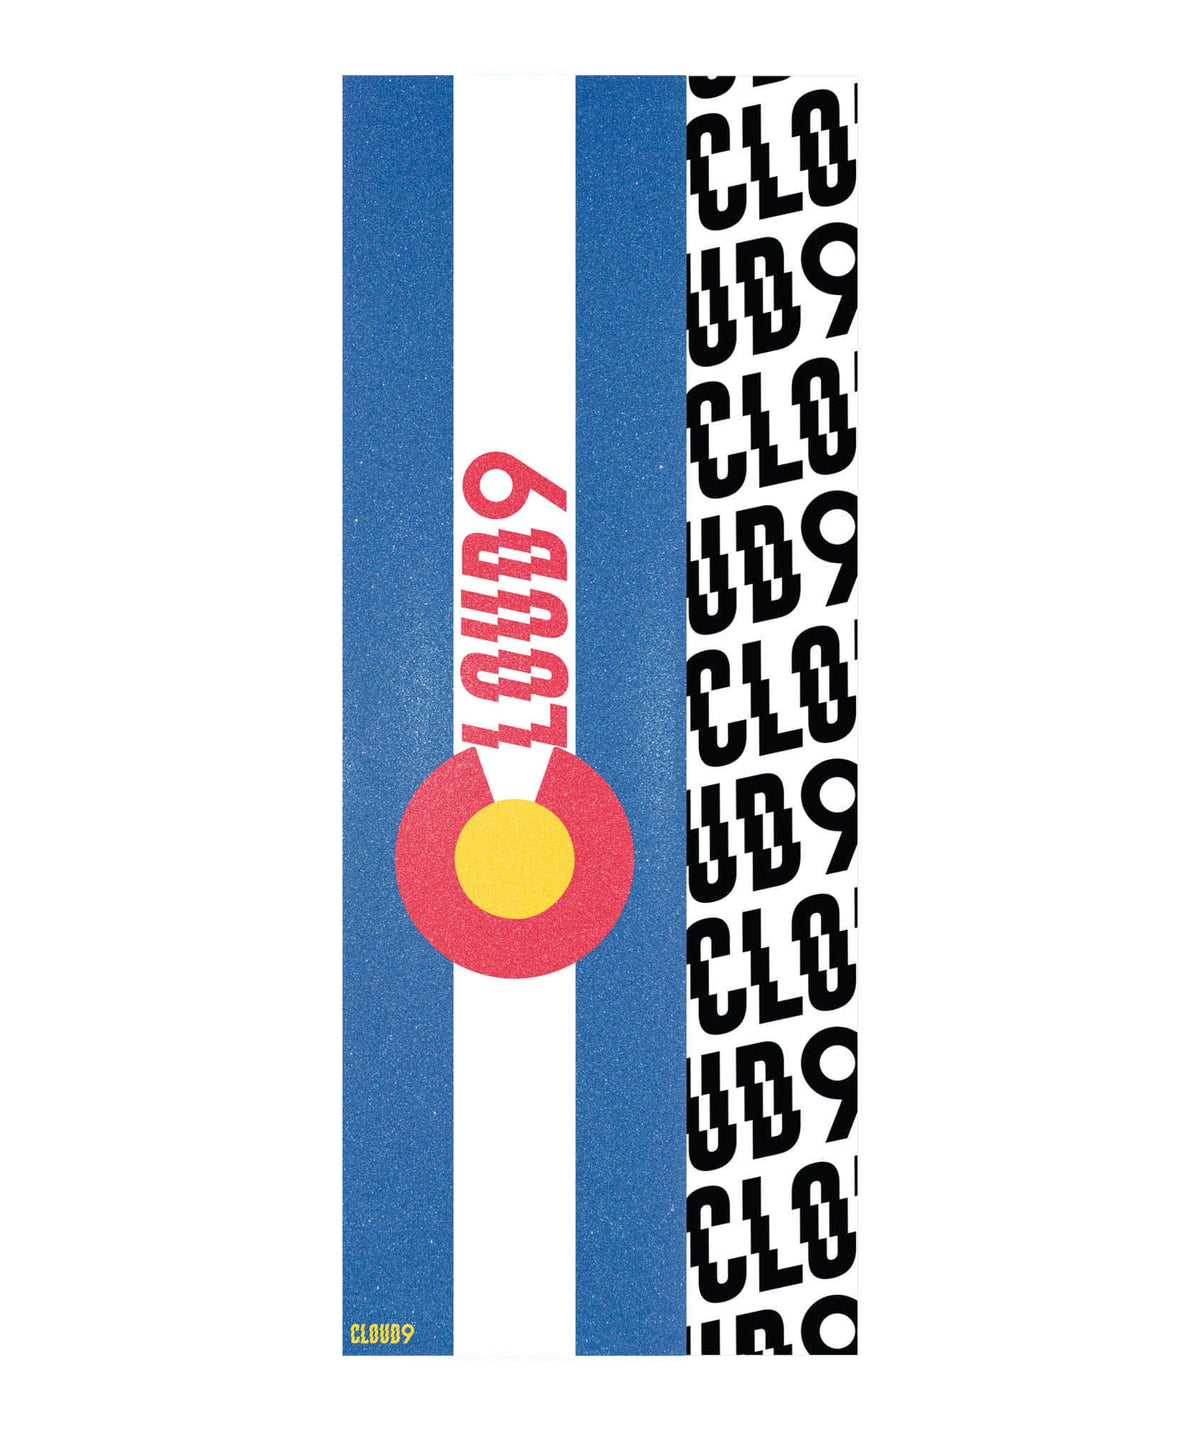 Cloud 9 Colorado Flag Grip Tape - Image 2